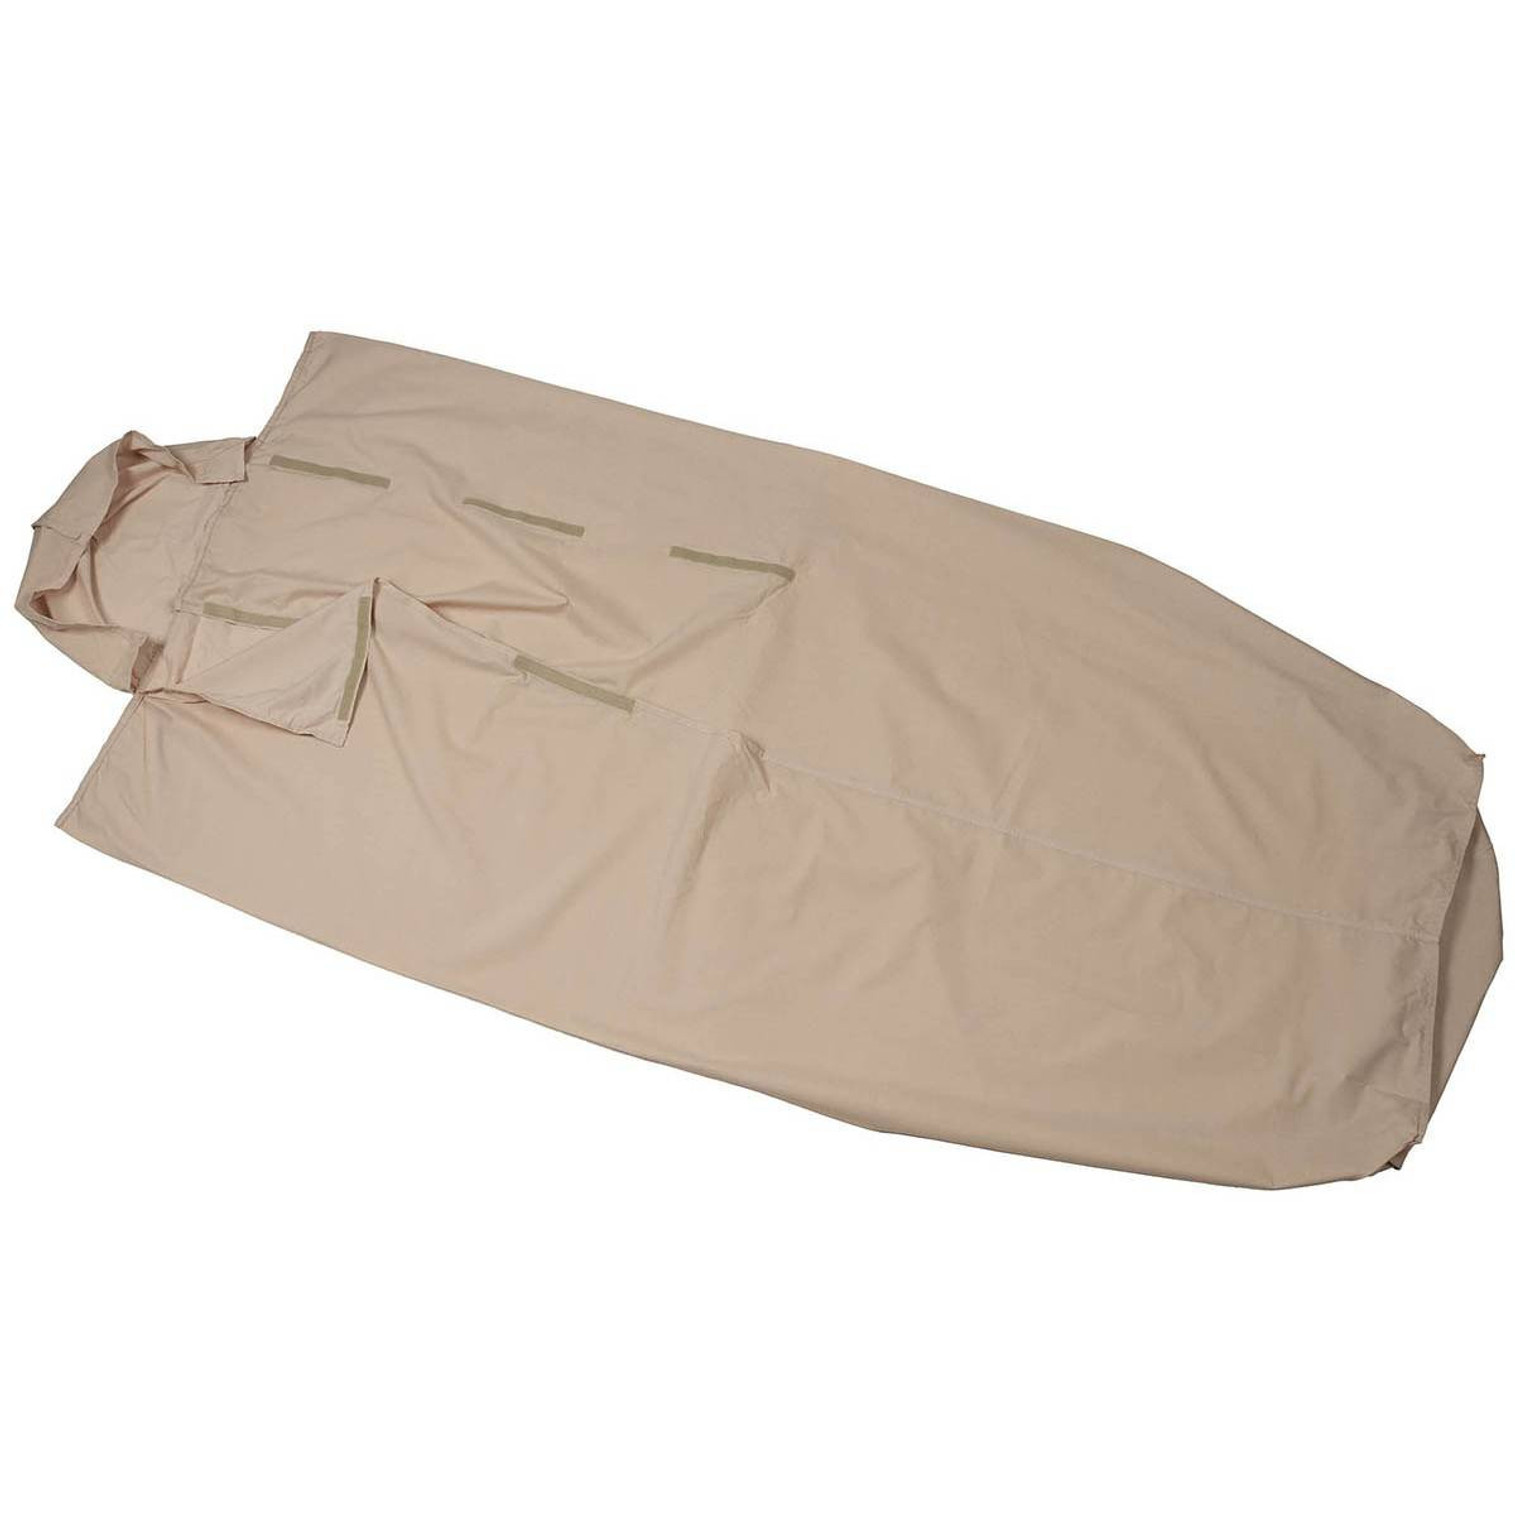 British Armed Forces Sleeping Bag Liner